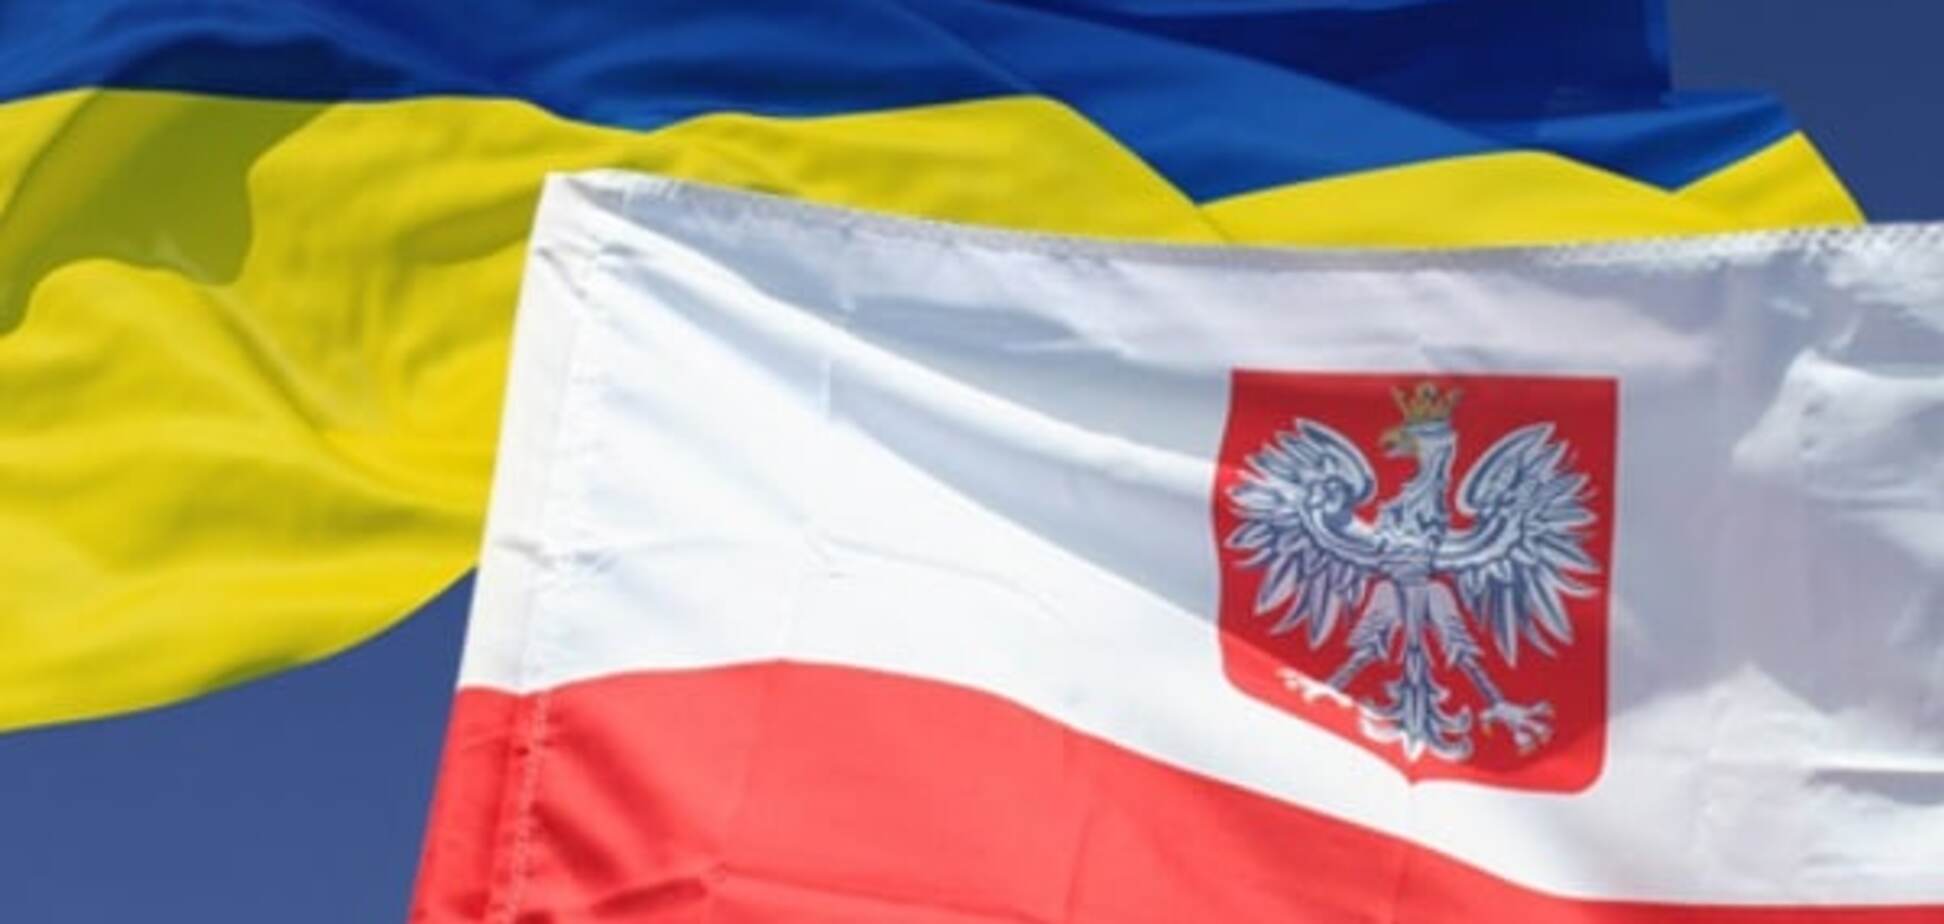 Прапори України та Польщі